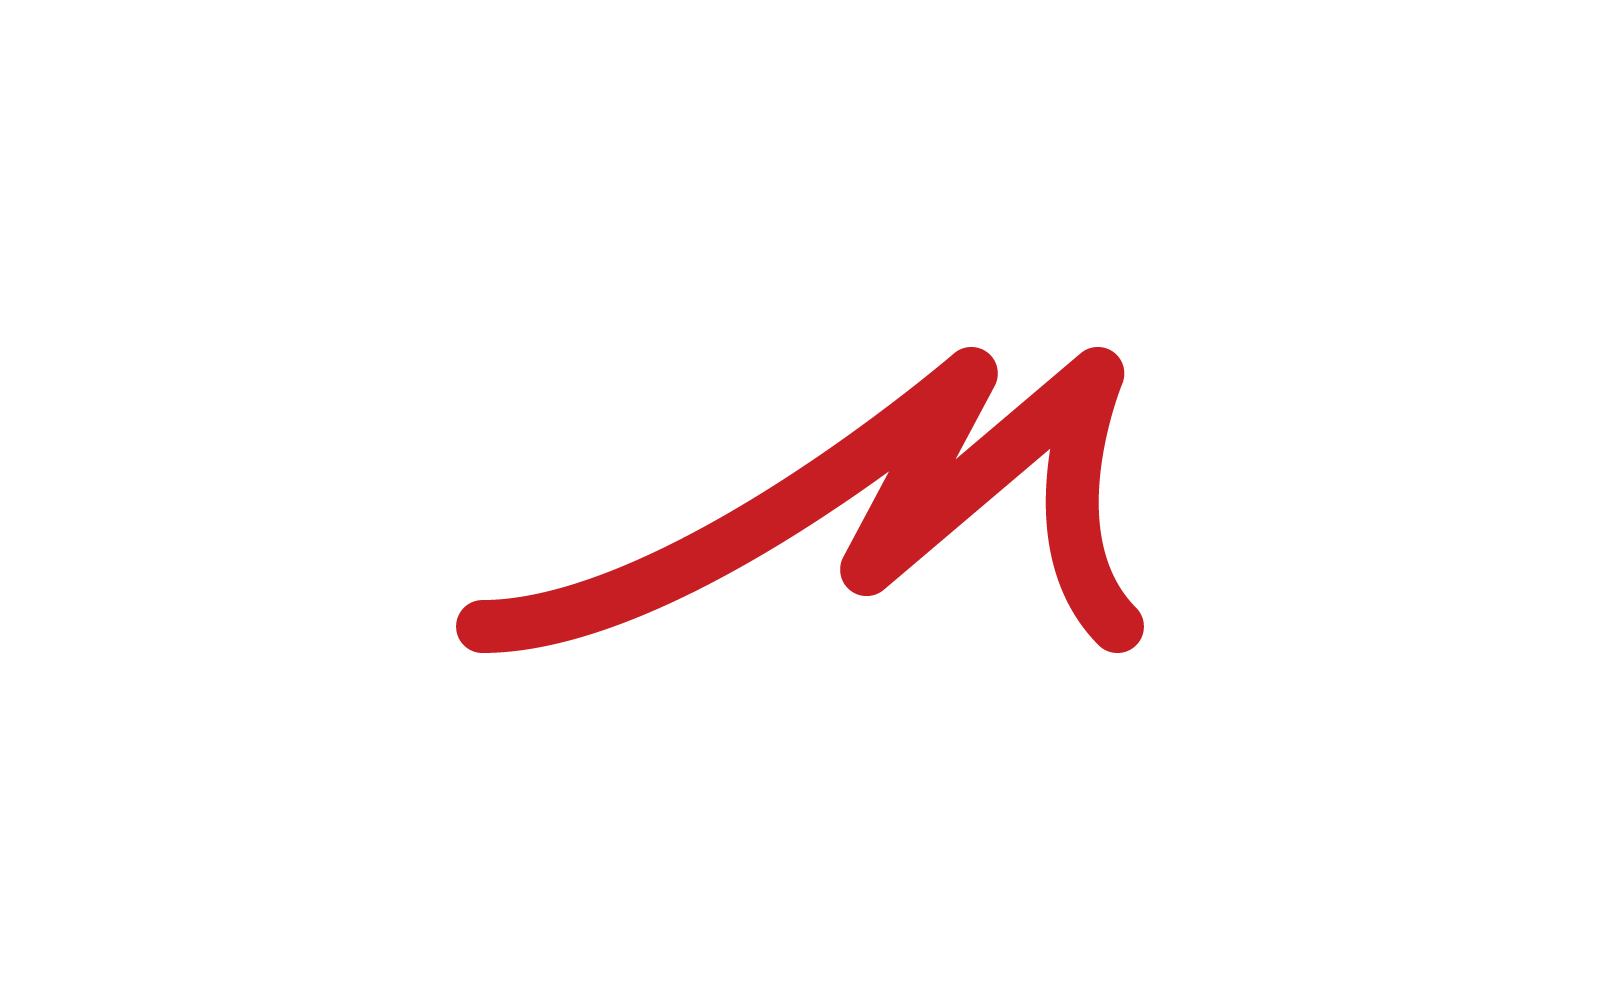 M or N Letter logo business illustration template